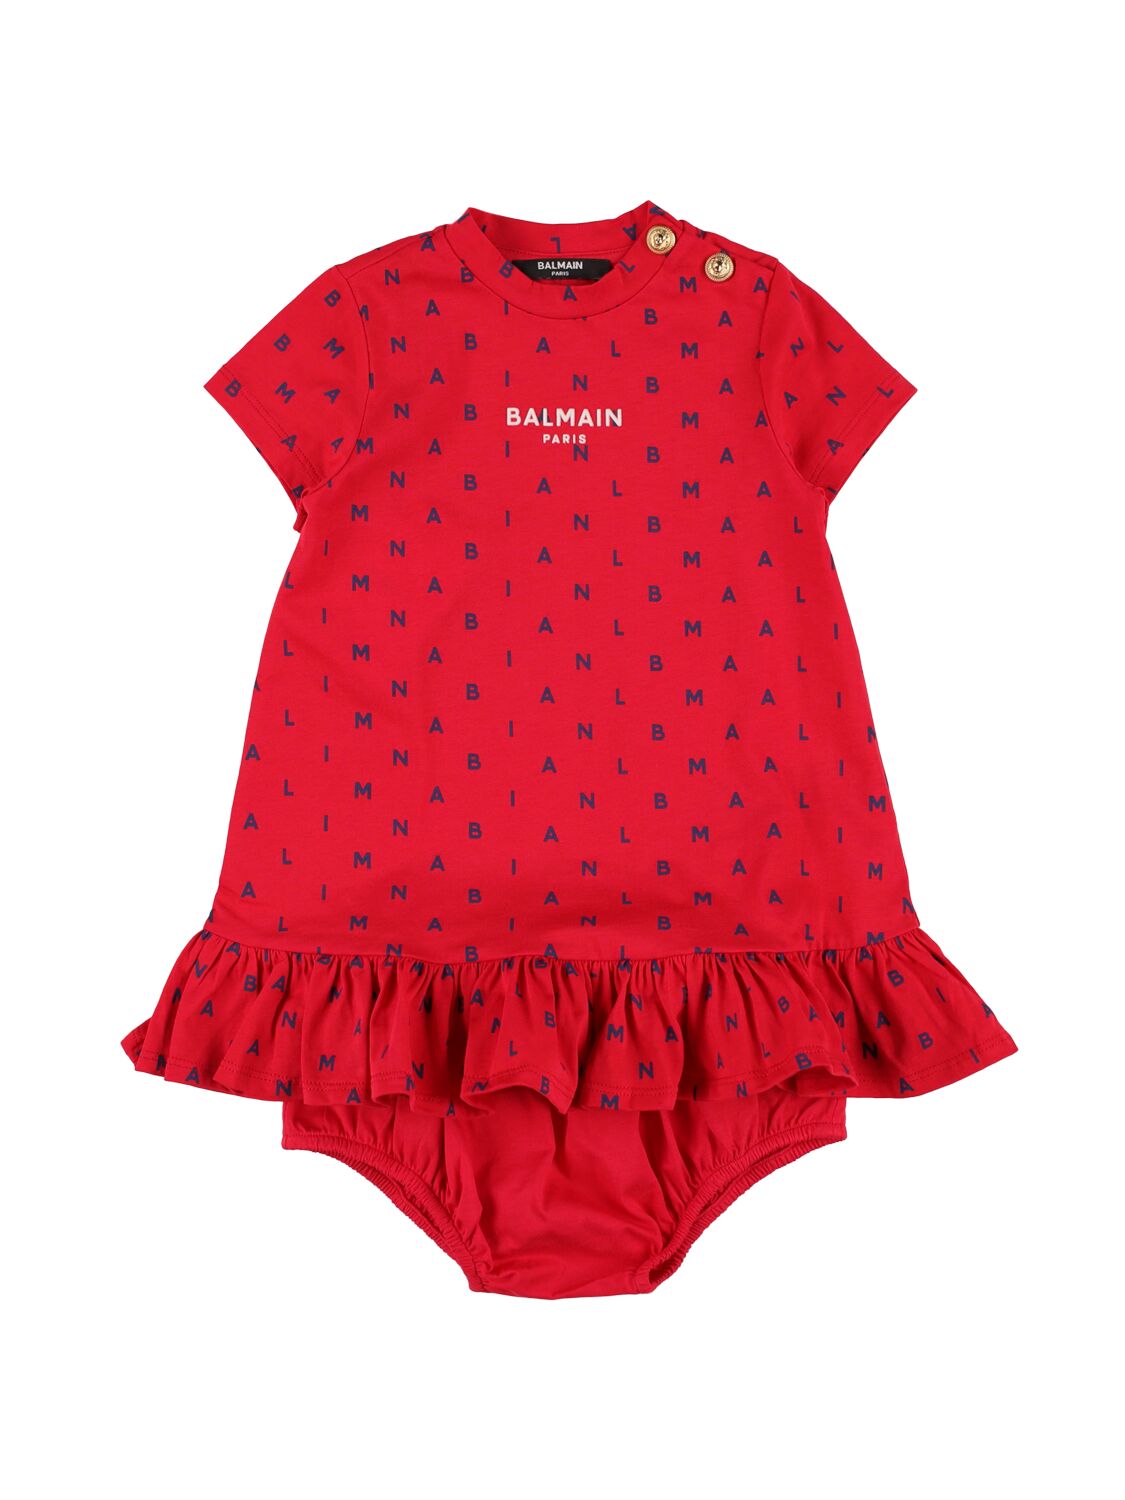 Balmain Kids' Cotton Jersey Dress W/ Diaper Cover In Red,blue